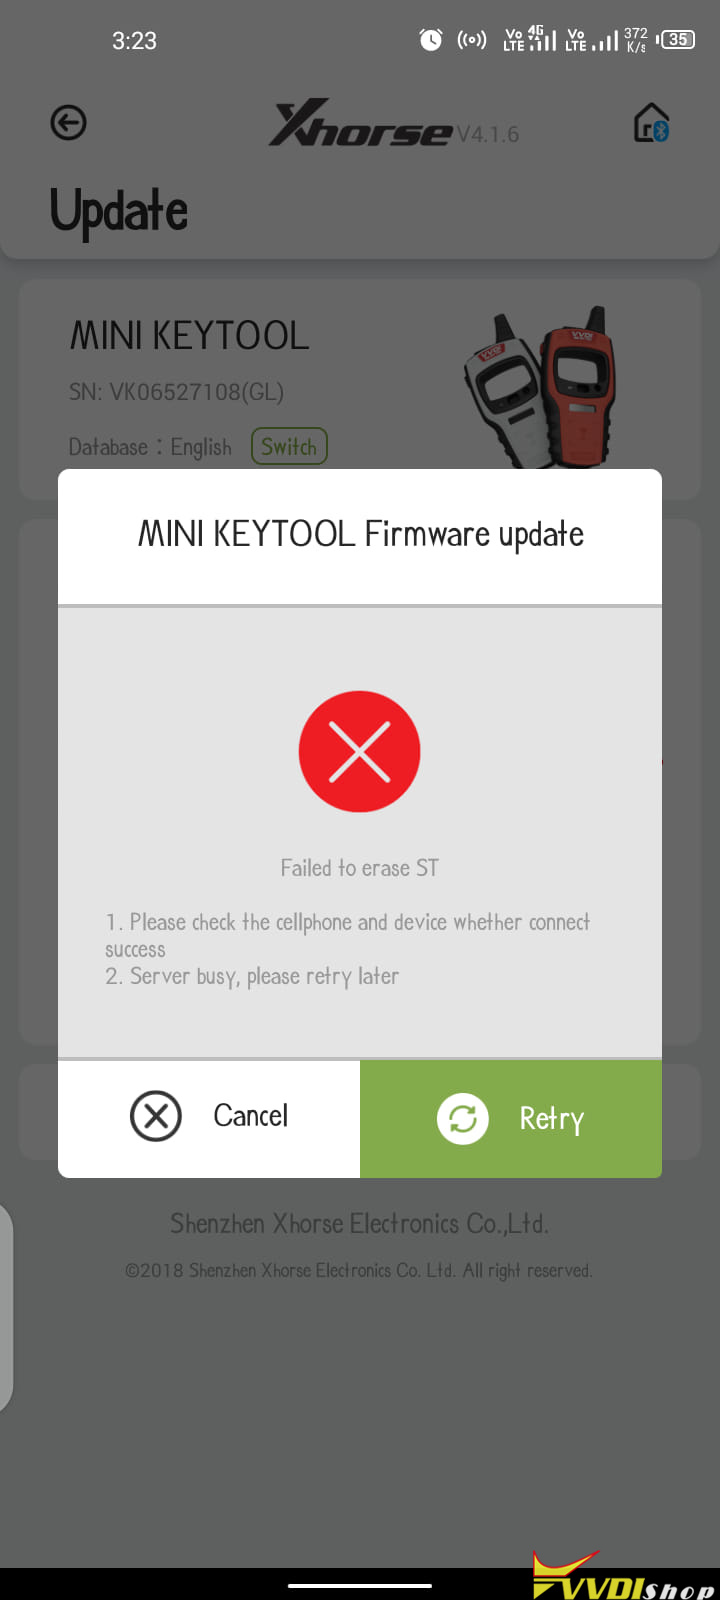 Xhorse Vvdi Mini Key Tool Failed To Erase St 1